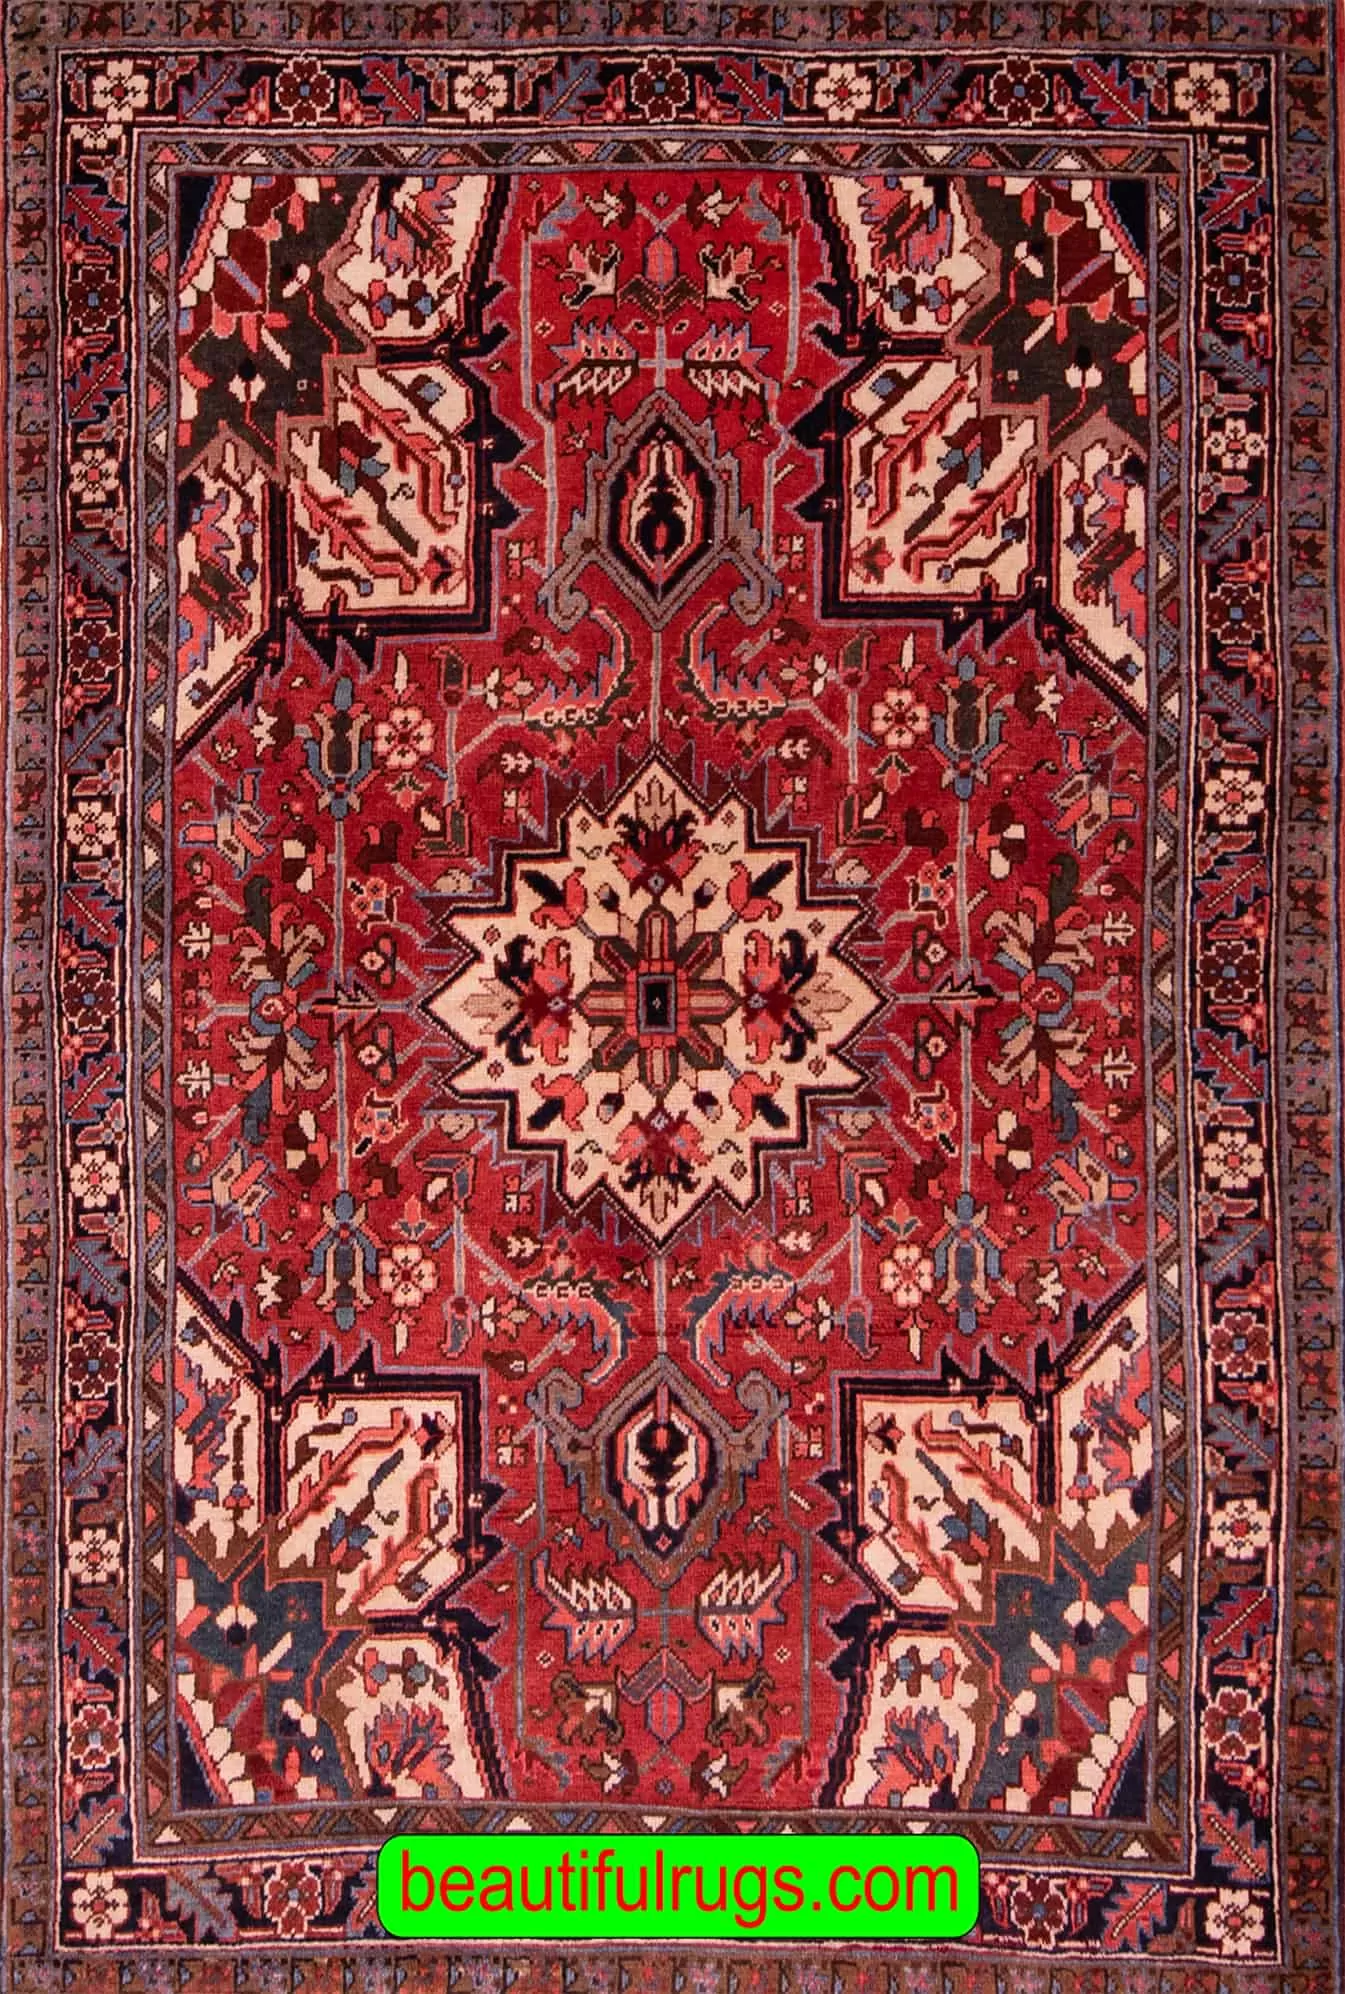 Iranian Carpet, Heriz Carpet, Small Carpet for Small Living Room. Size 5x6.7